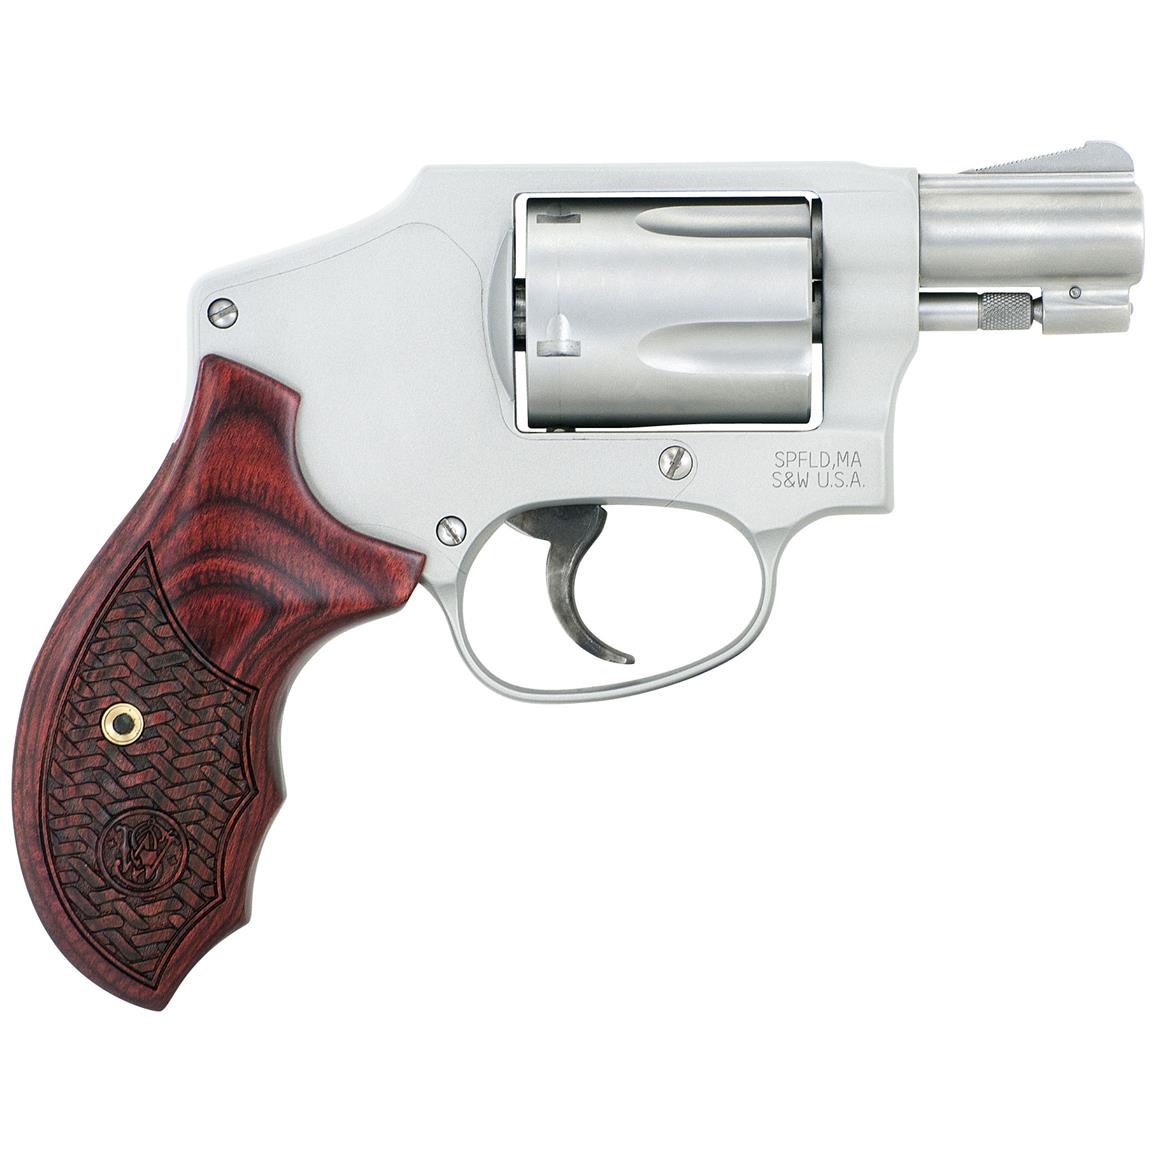 Smith & Wesson 642 Performance Center Talo, Revolver, .38 Special +P, 170348, 22188703481, 1.875 inch Barrel